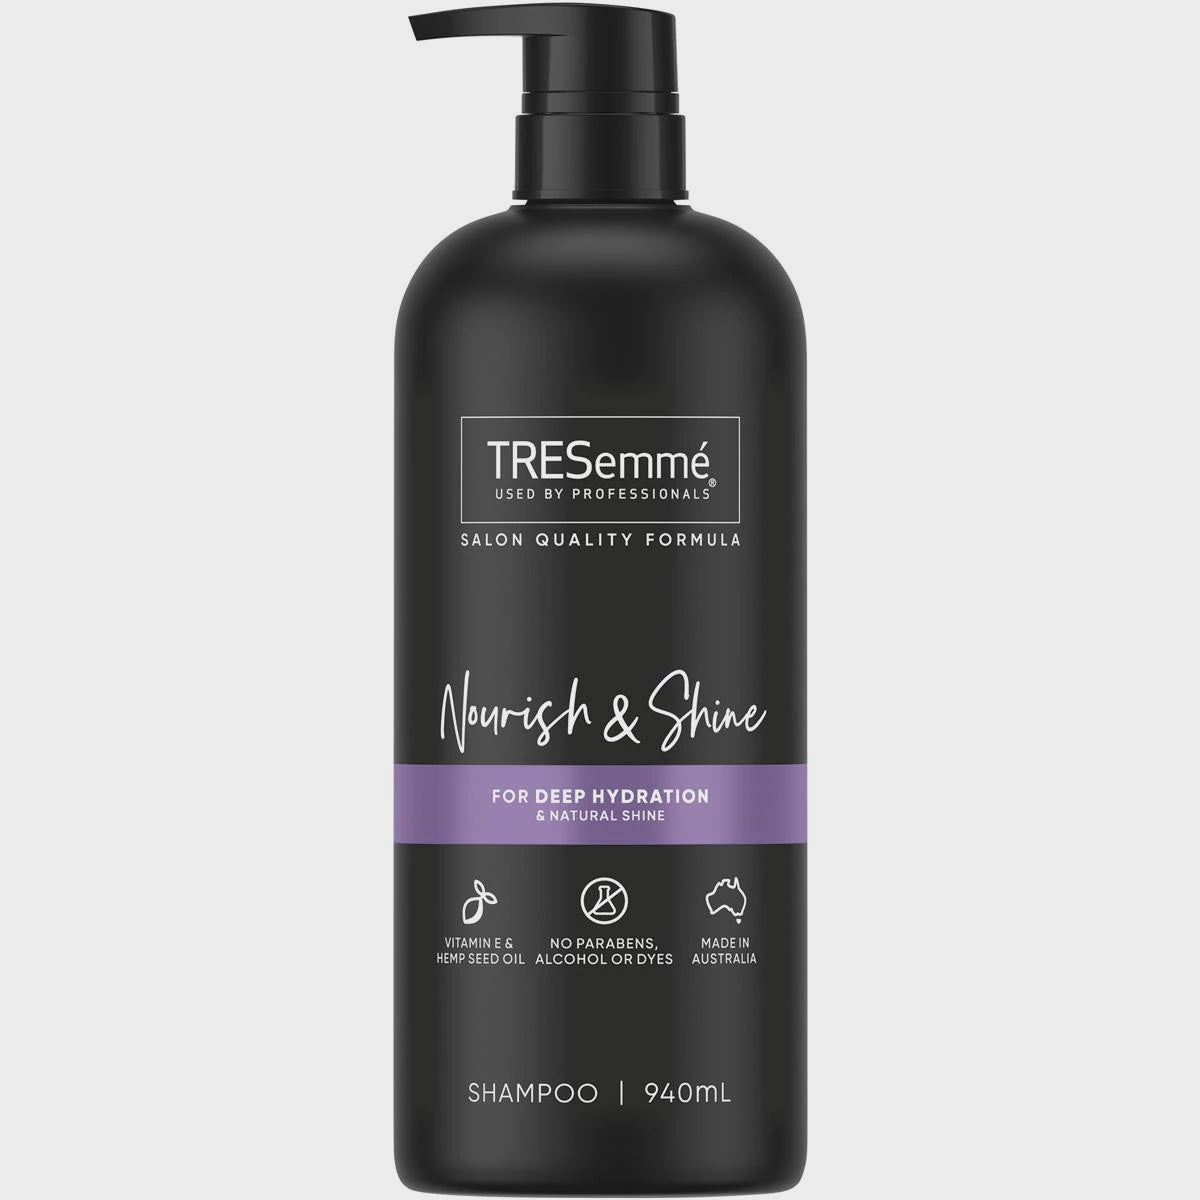 TRESemme Nourish & Shine Shampoo 940mL